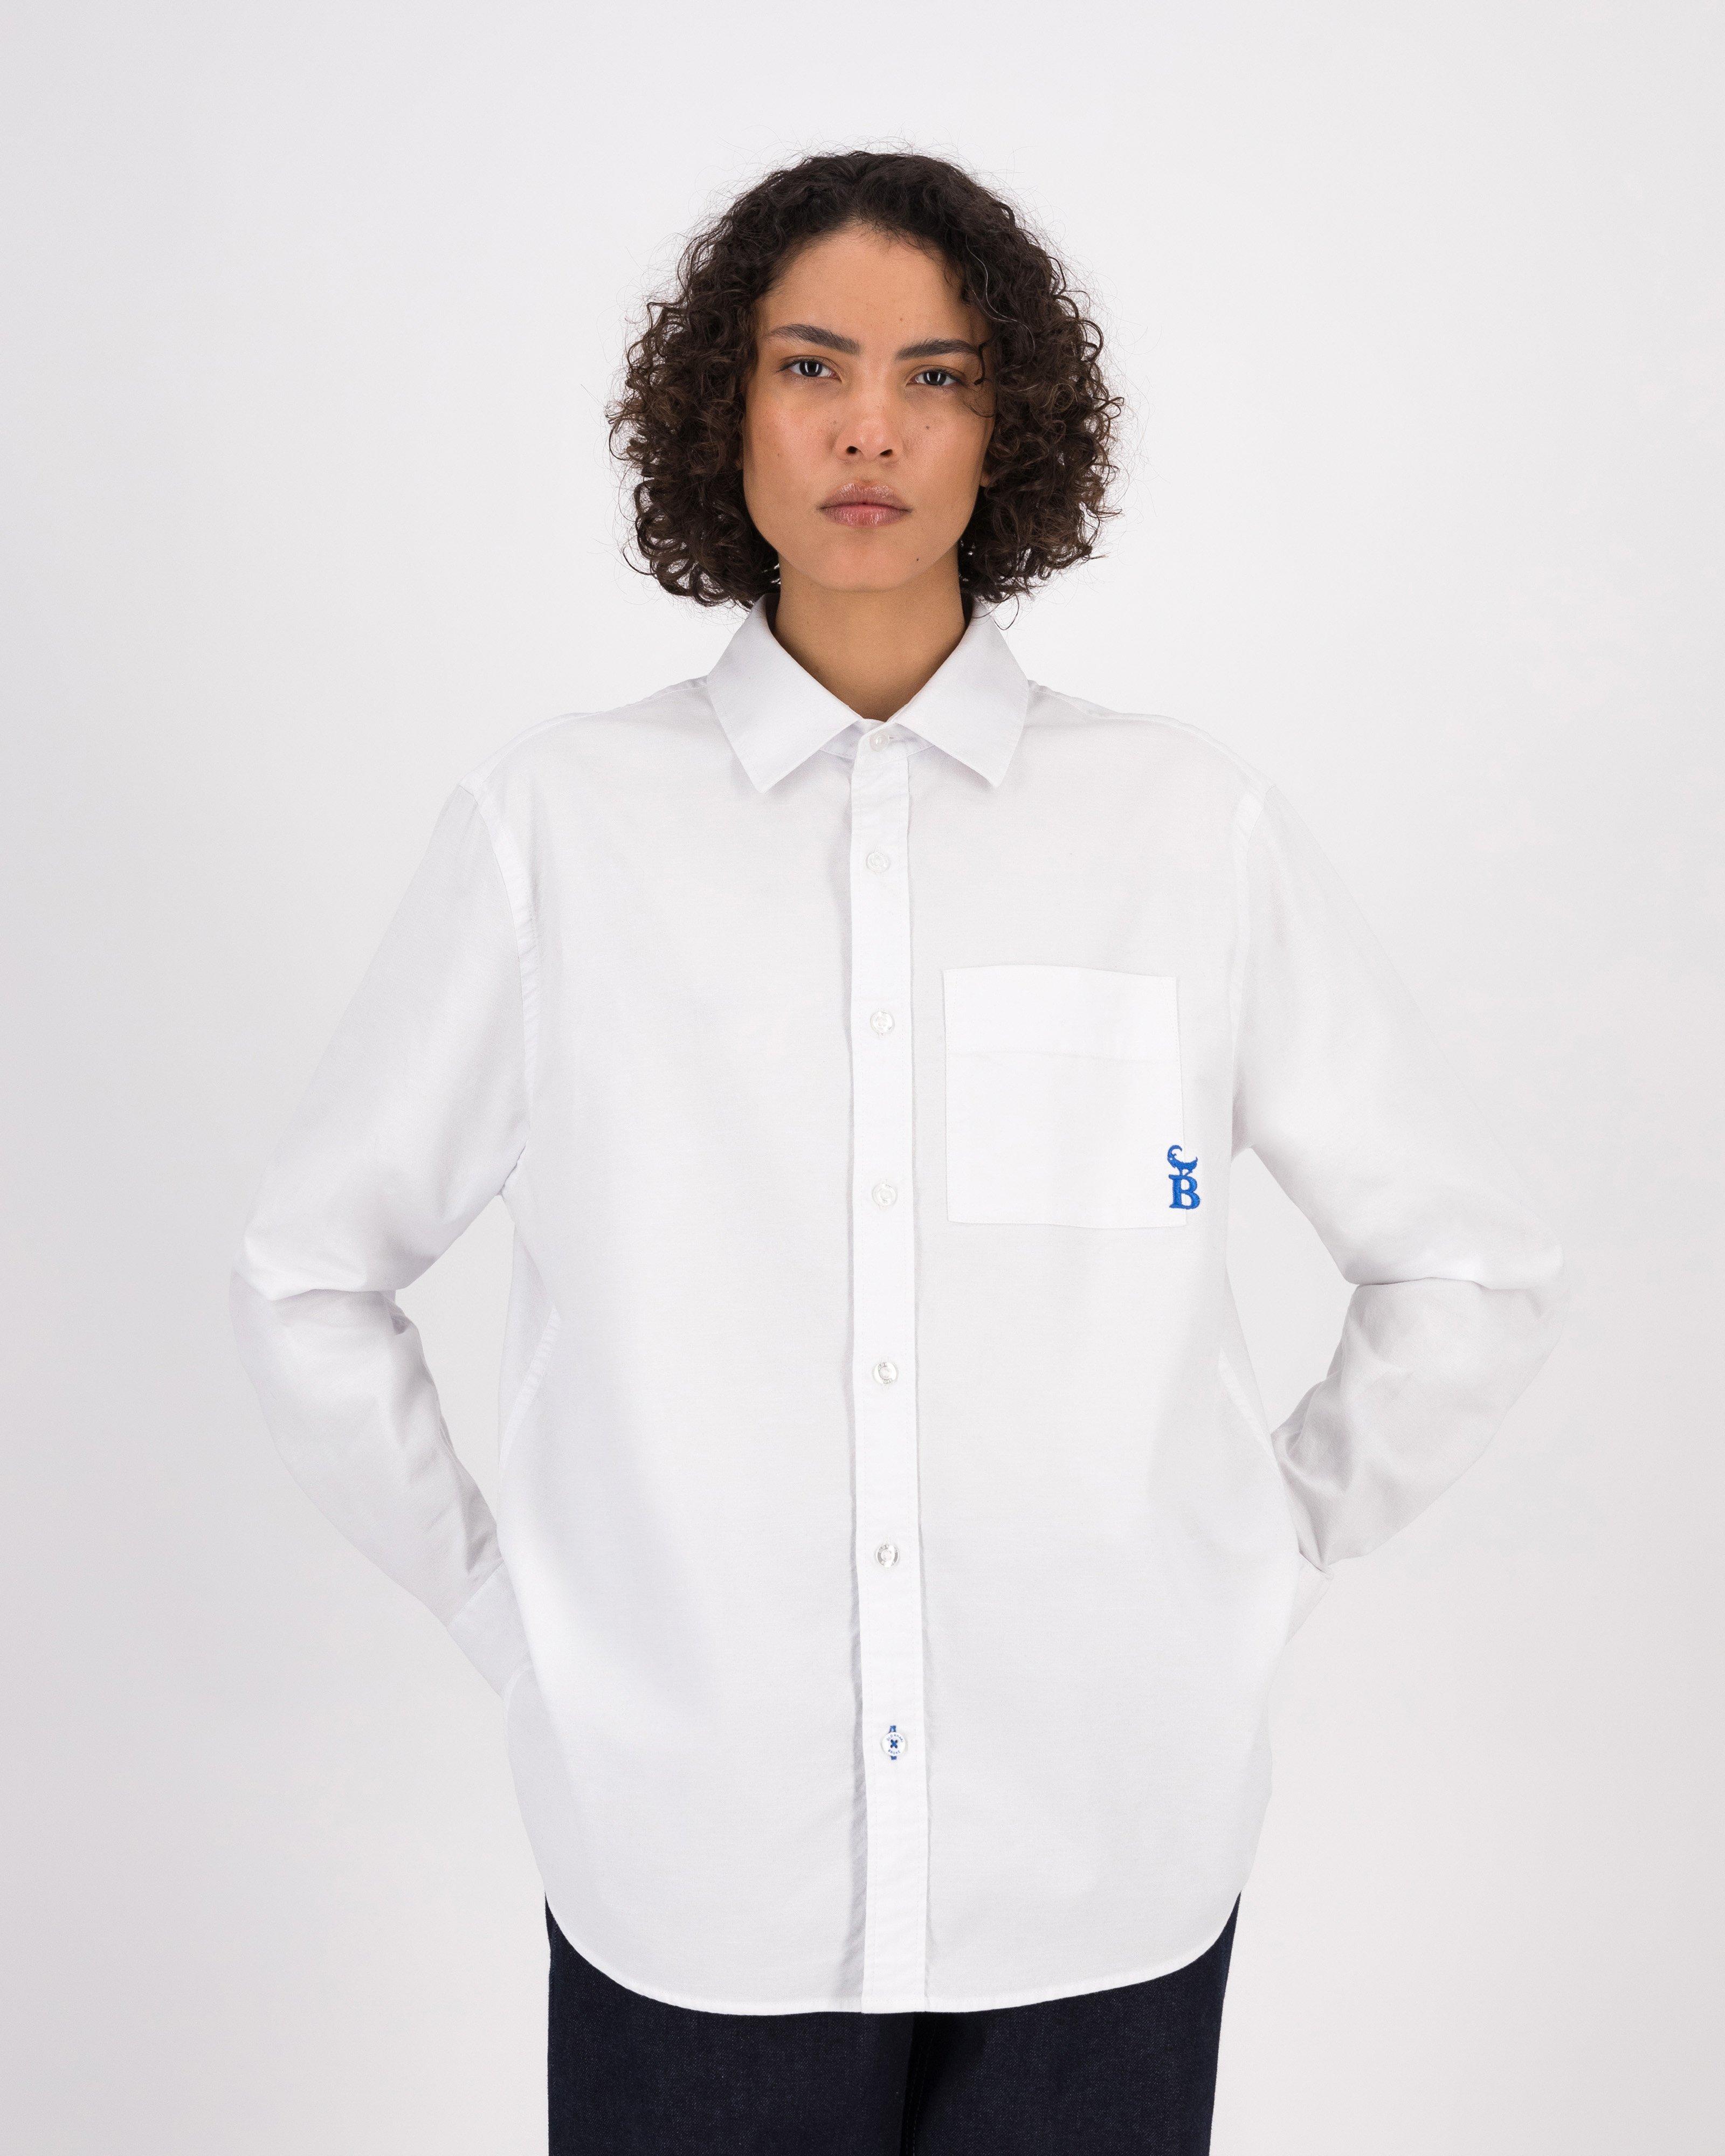 BROKE x Old Khaki Unisex White Shirt -  White